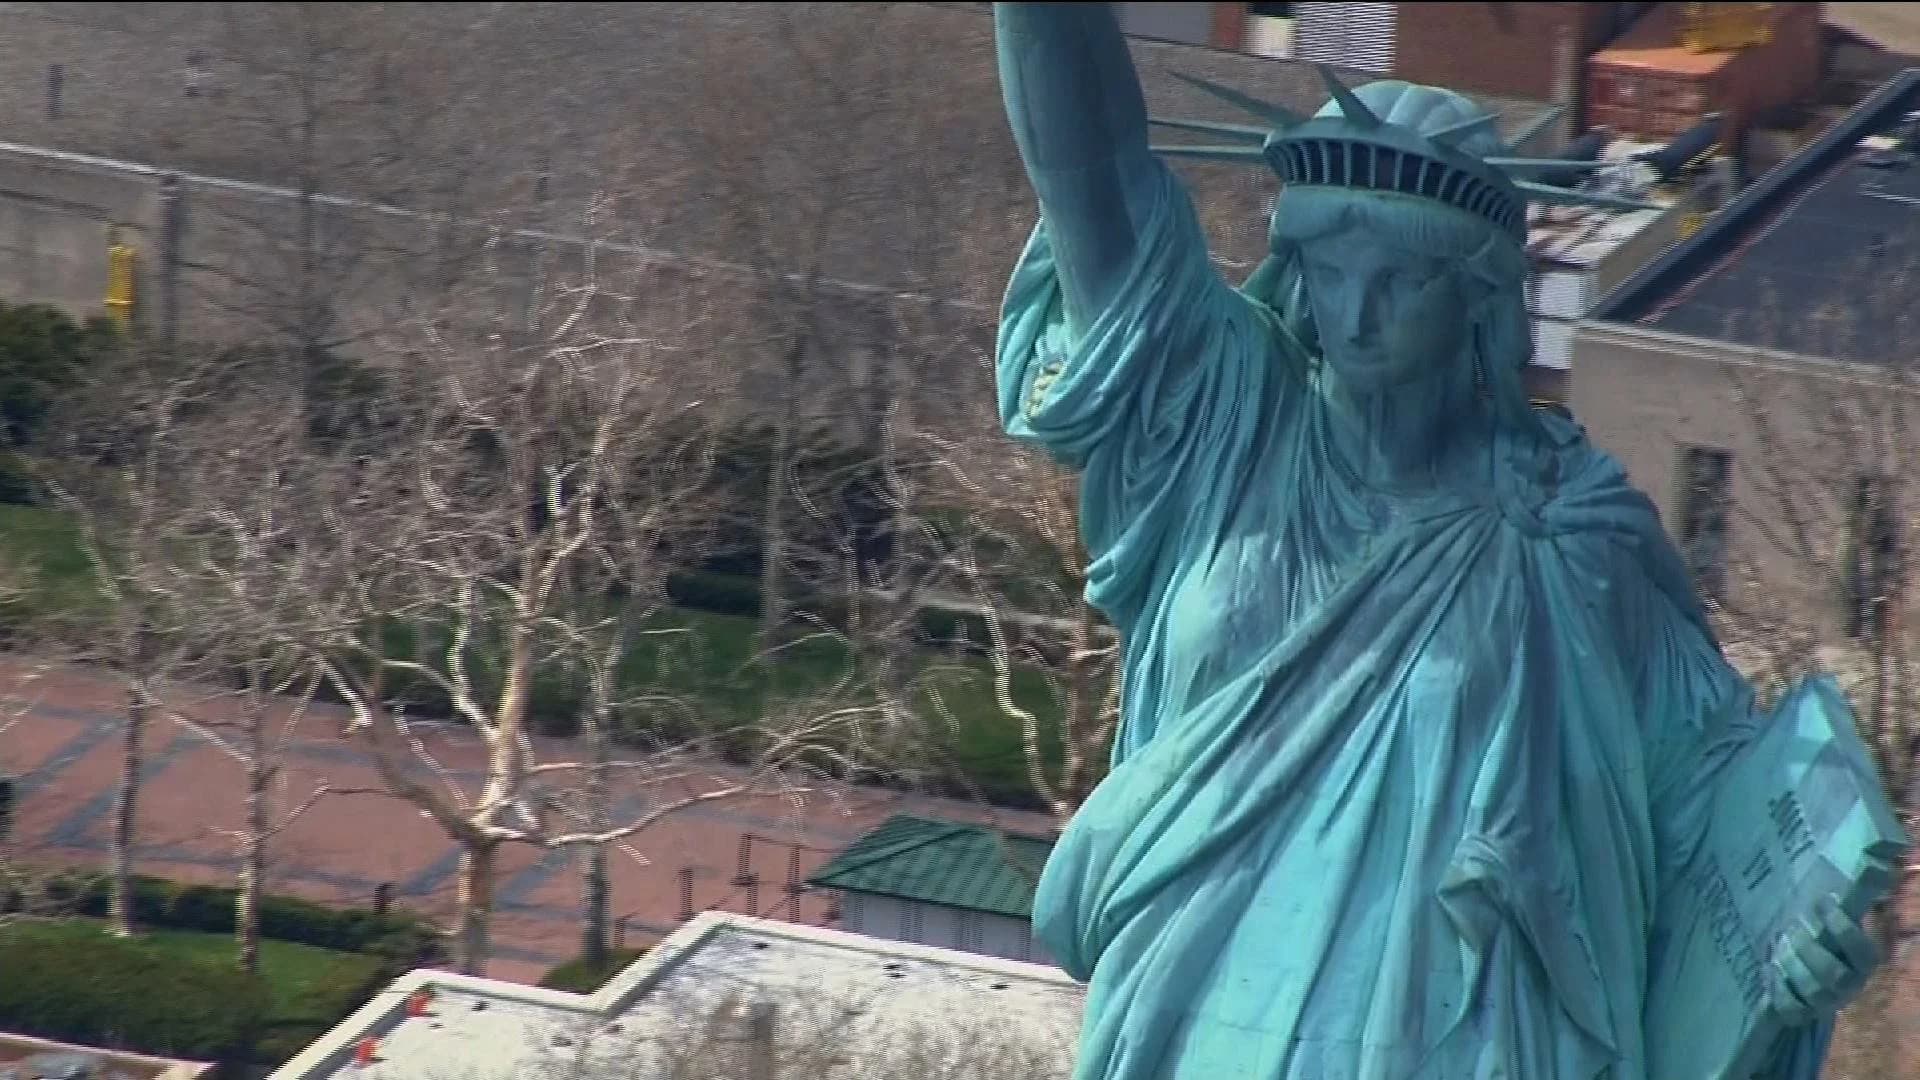 Statue of Liberty remained open Monday despite shutdown